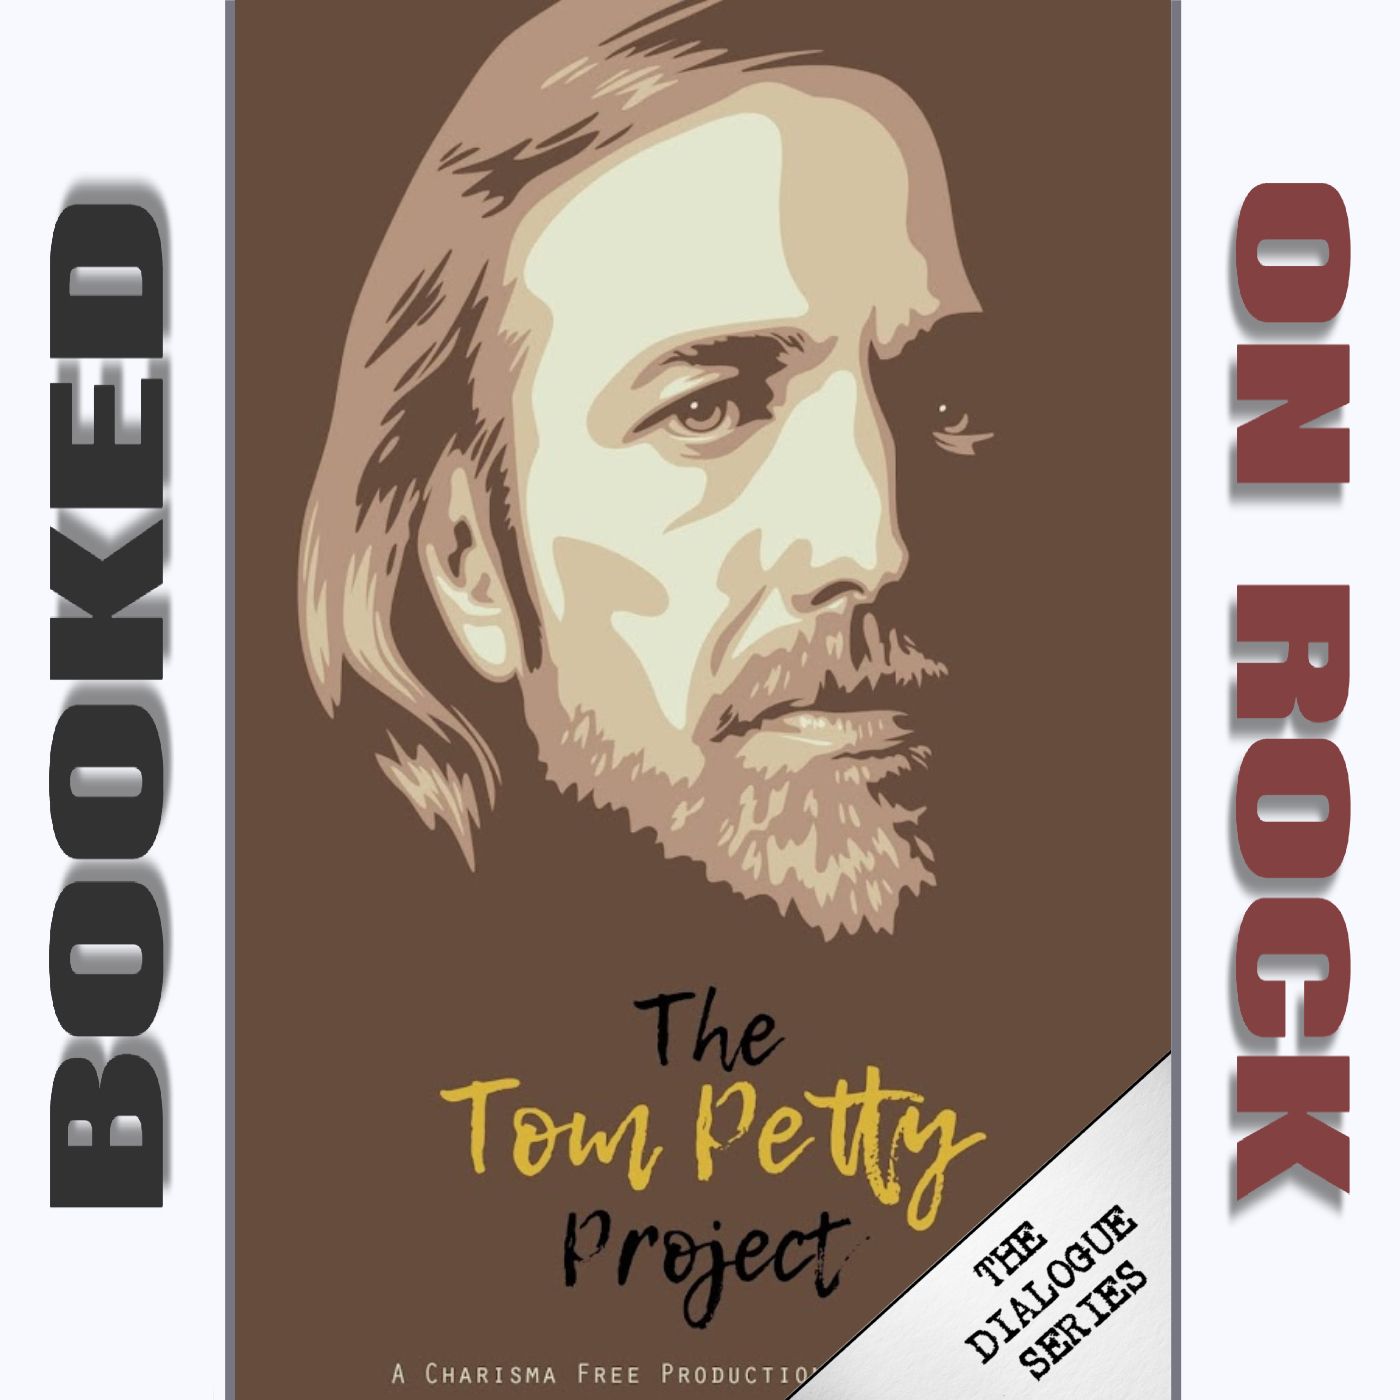 Tom Petty's Musical Legacy w/ 